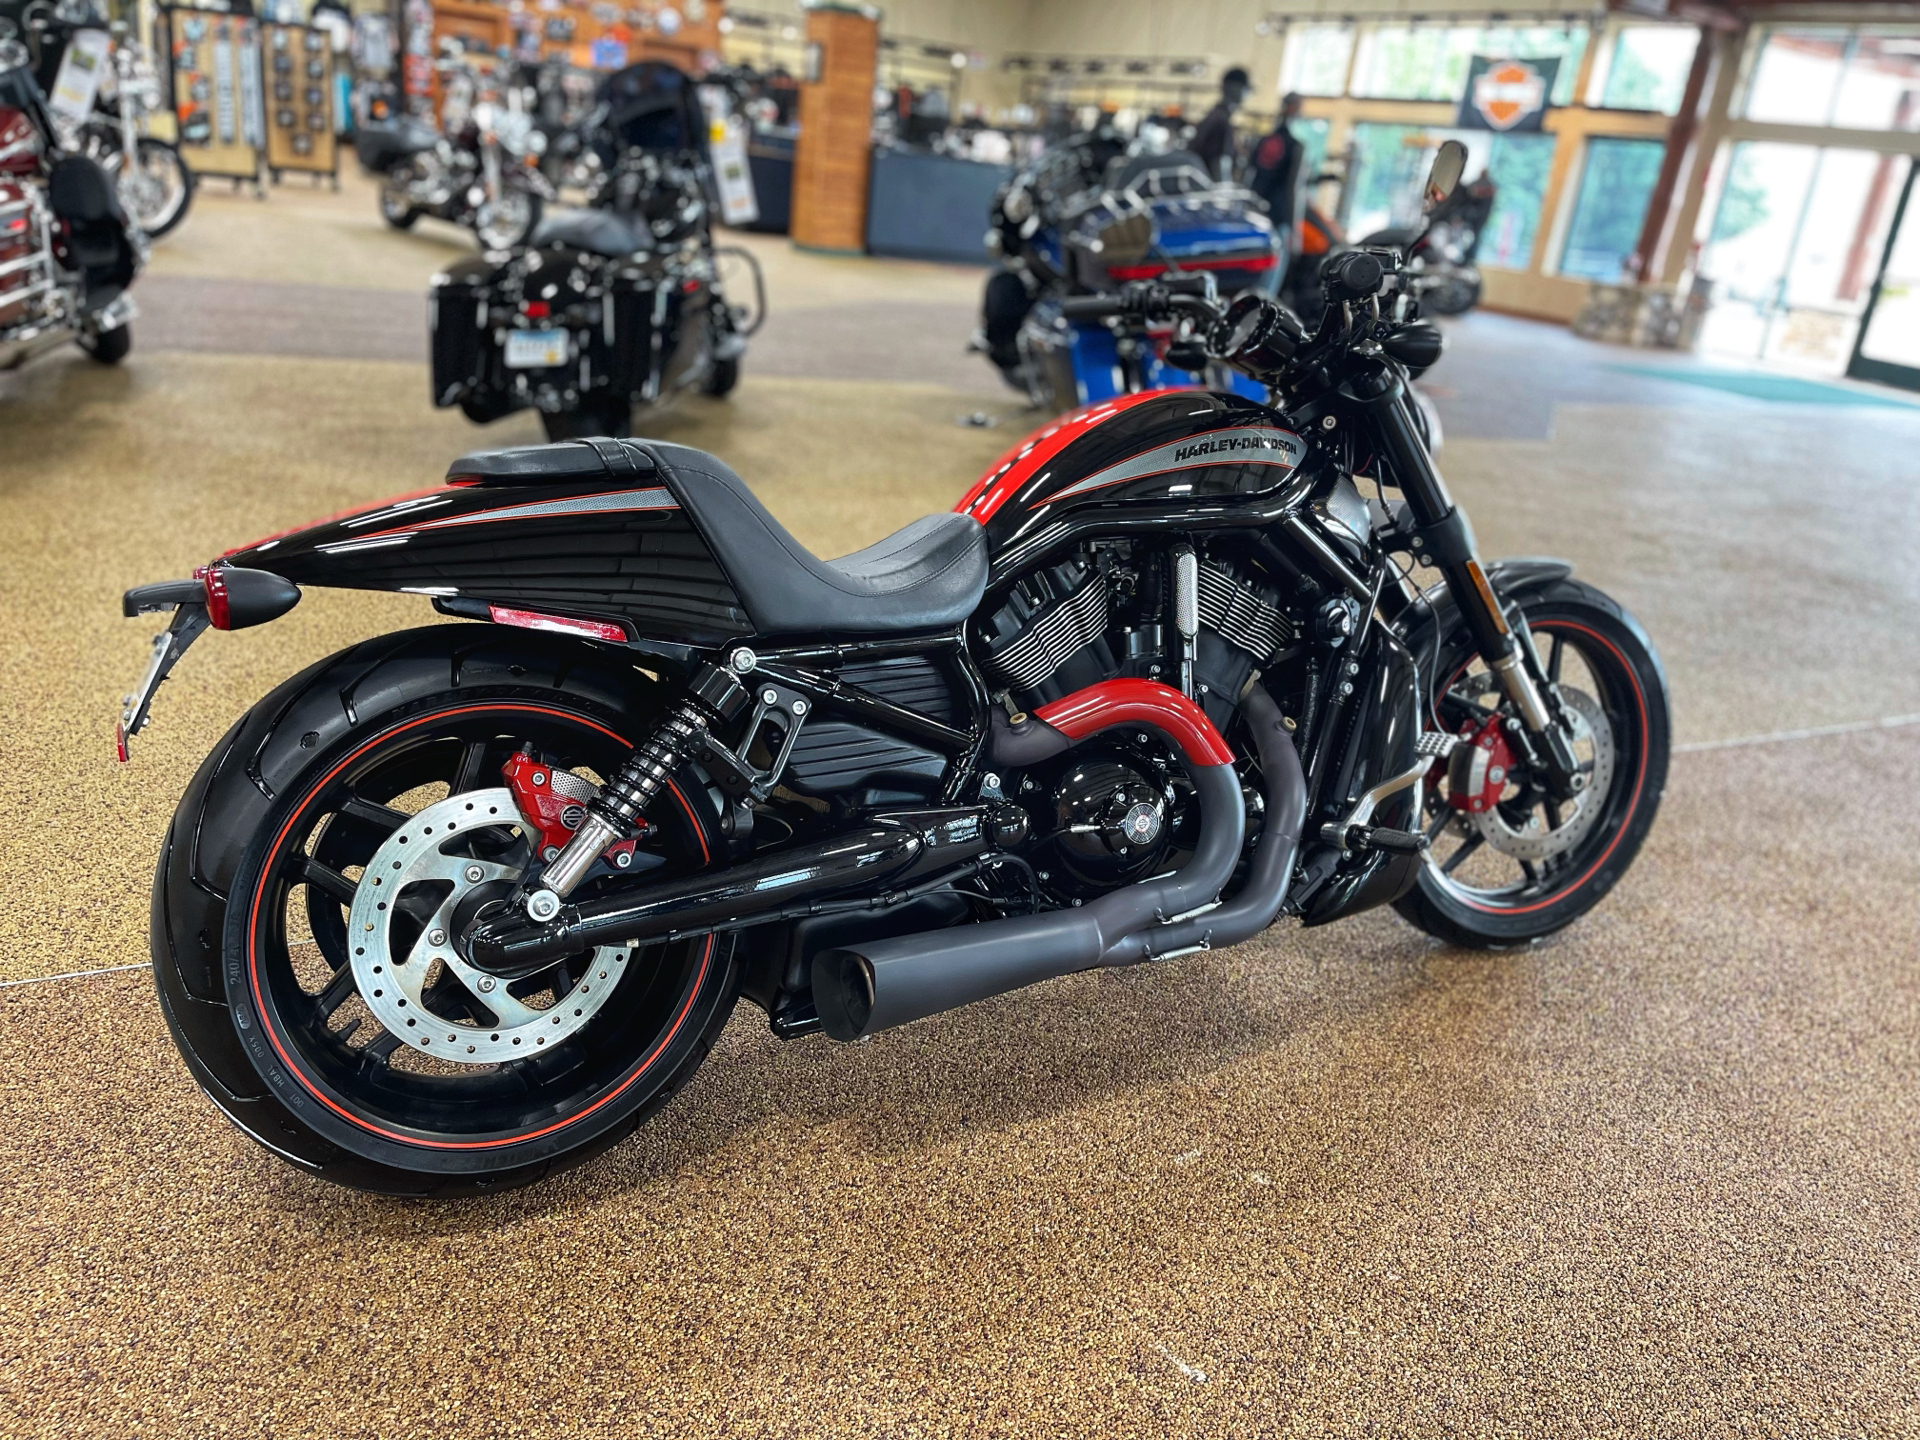 Used 2016 Harley Davidson Night Rod Special Vivid Black Motorcycles In Sauk Rapids Mn B0024